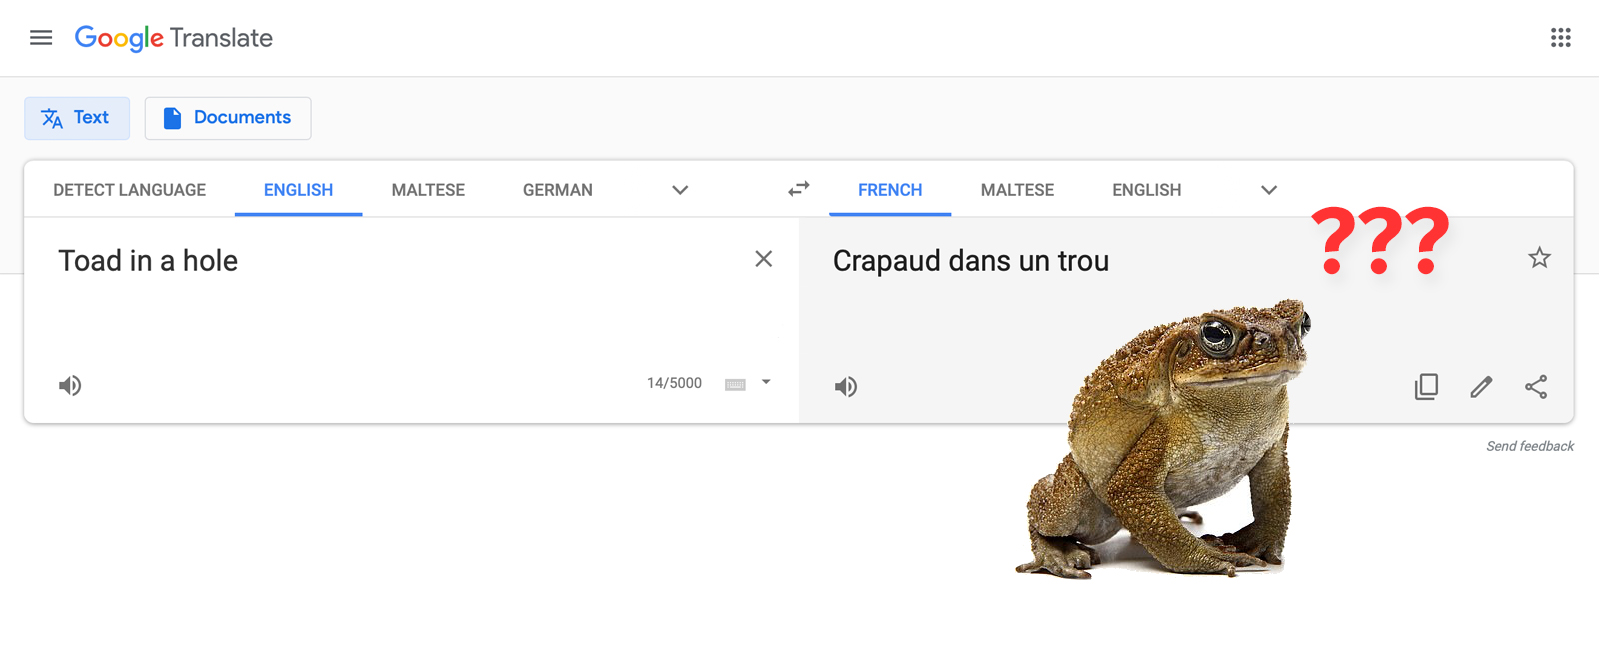 Toad in a hole translation fail